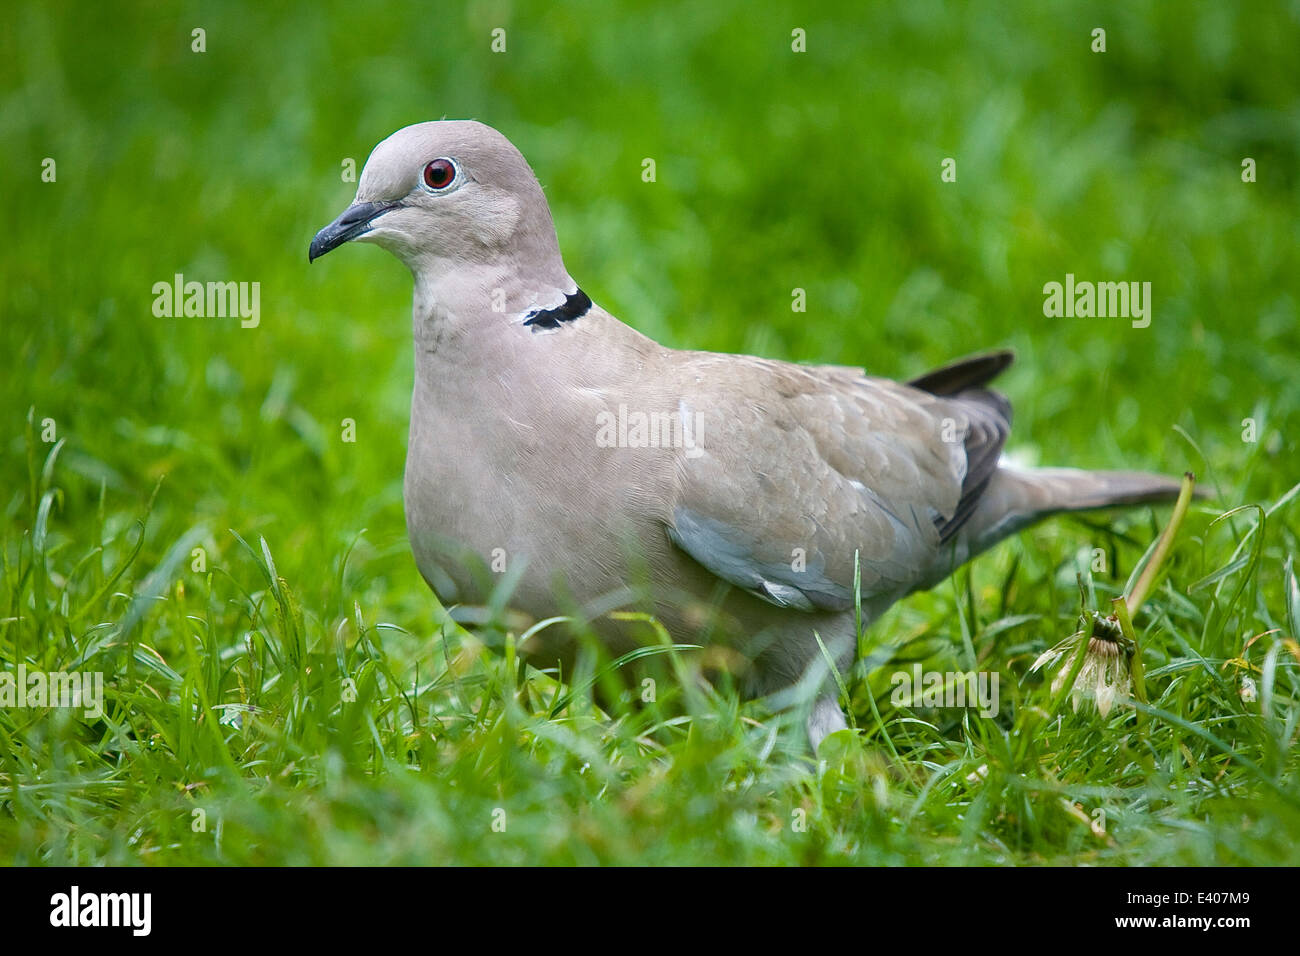 Ring neck dove -Fotos und -Bildmaterial in hoher Auflösung – Alamy